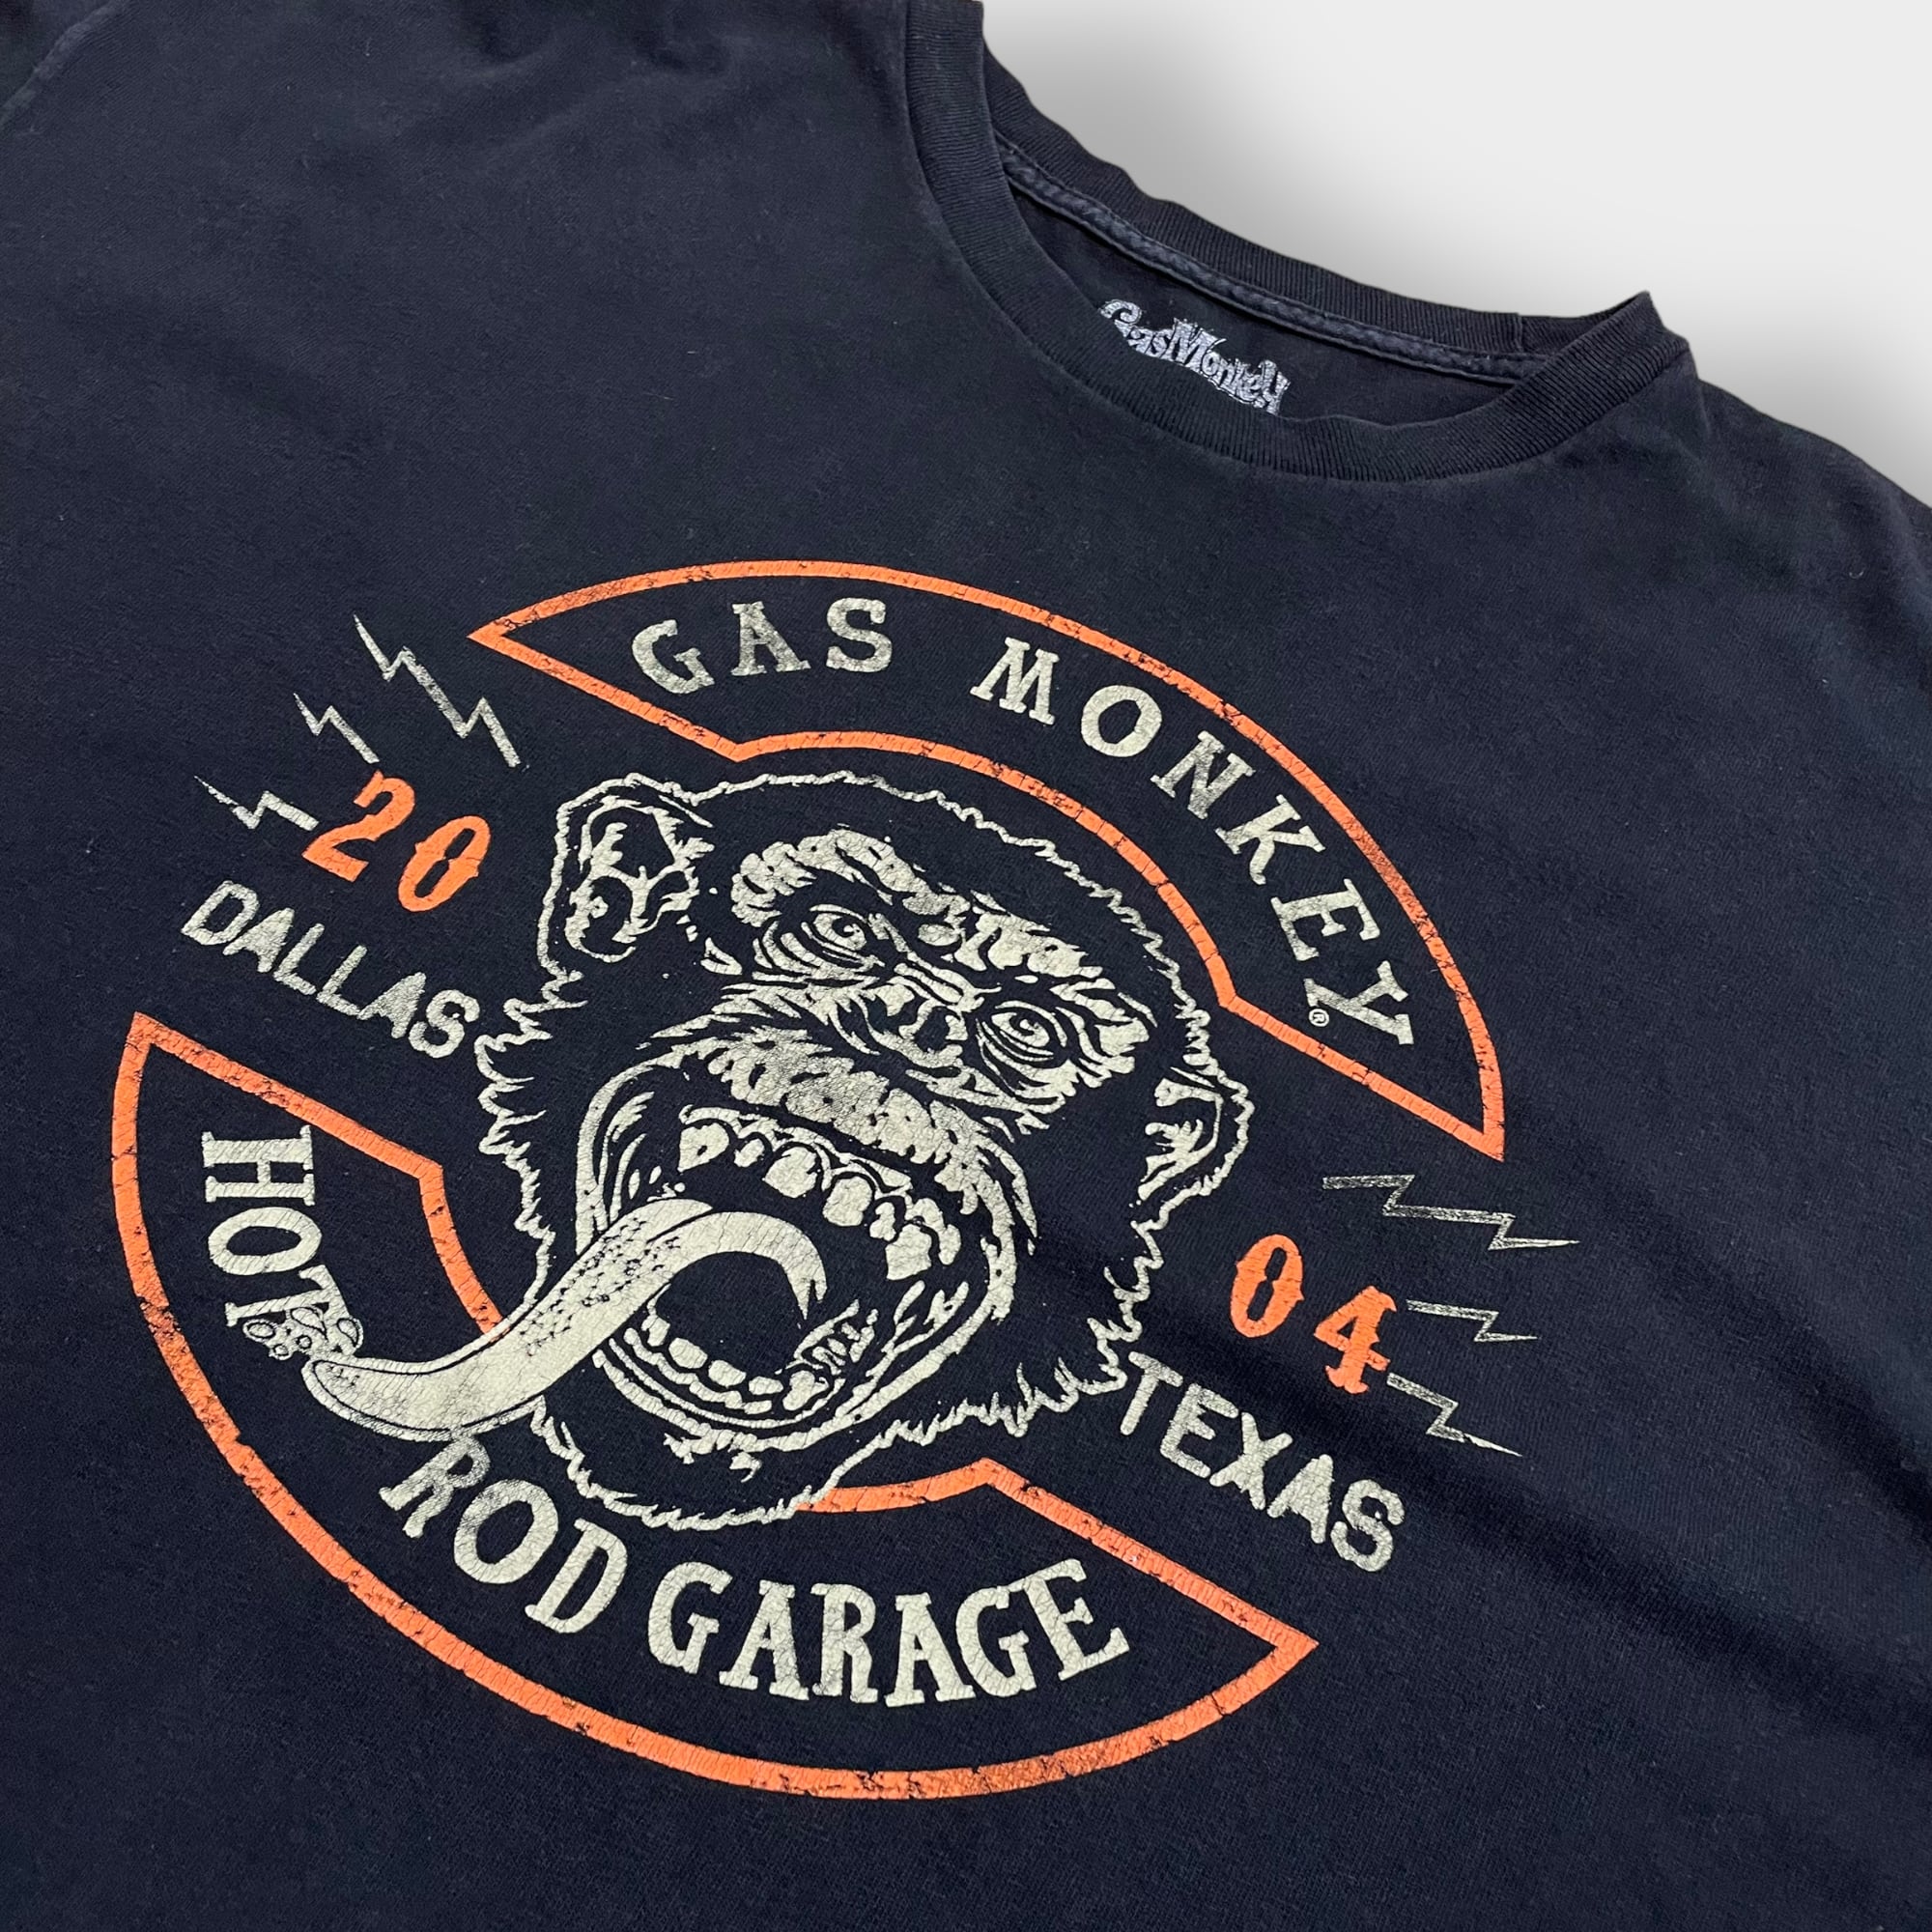 Gas Monky Tシャツ DALLAS TEXAS ビッグサイズ 濃灰